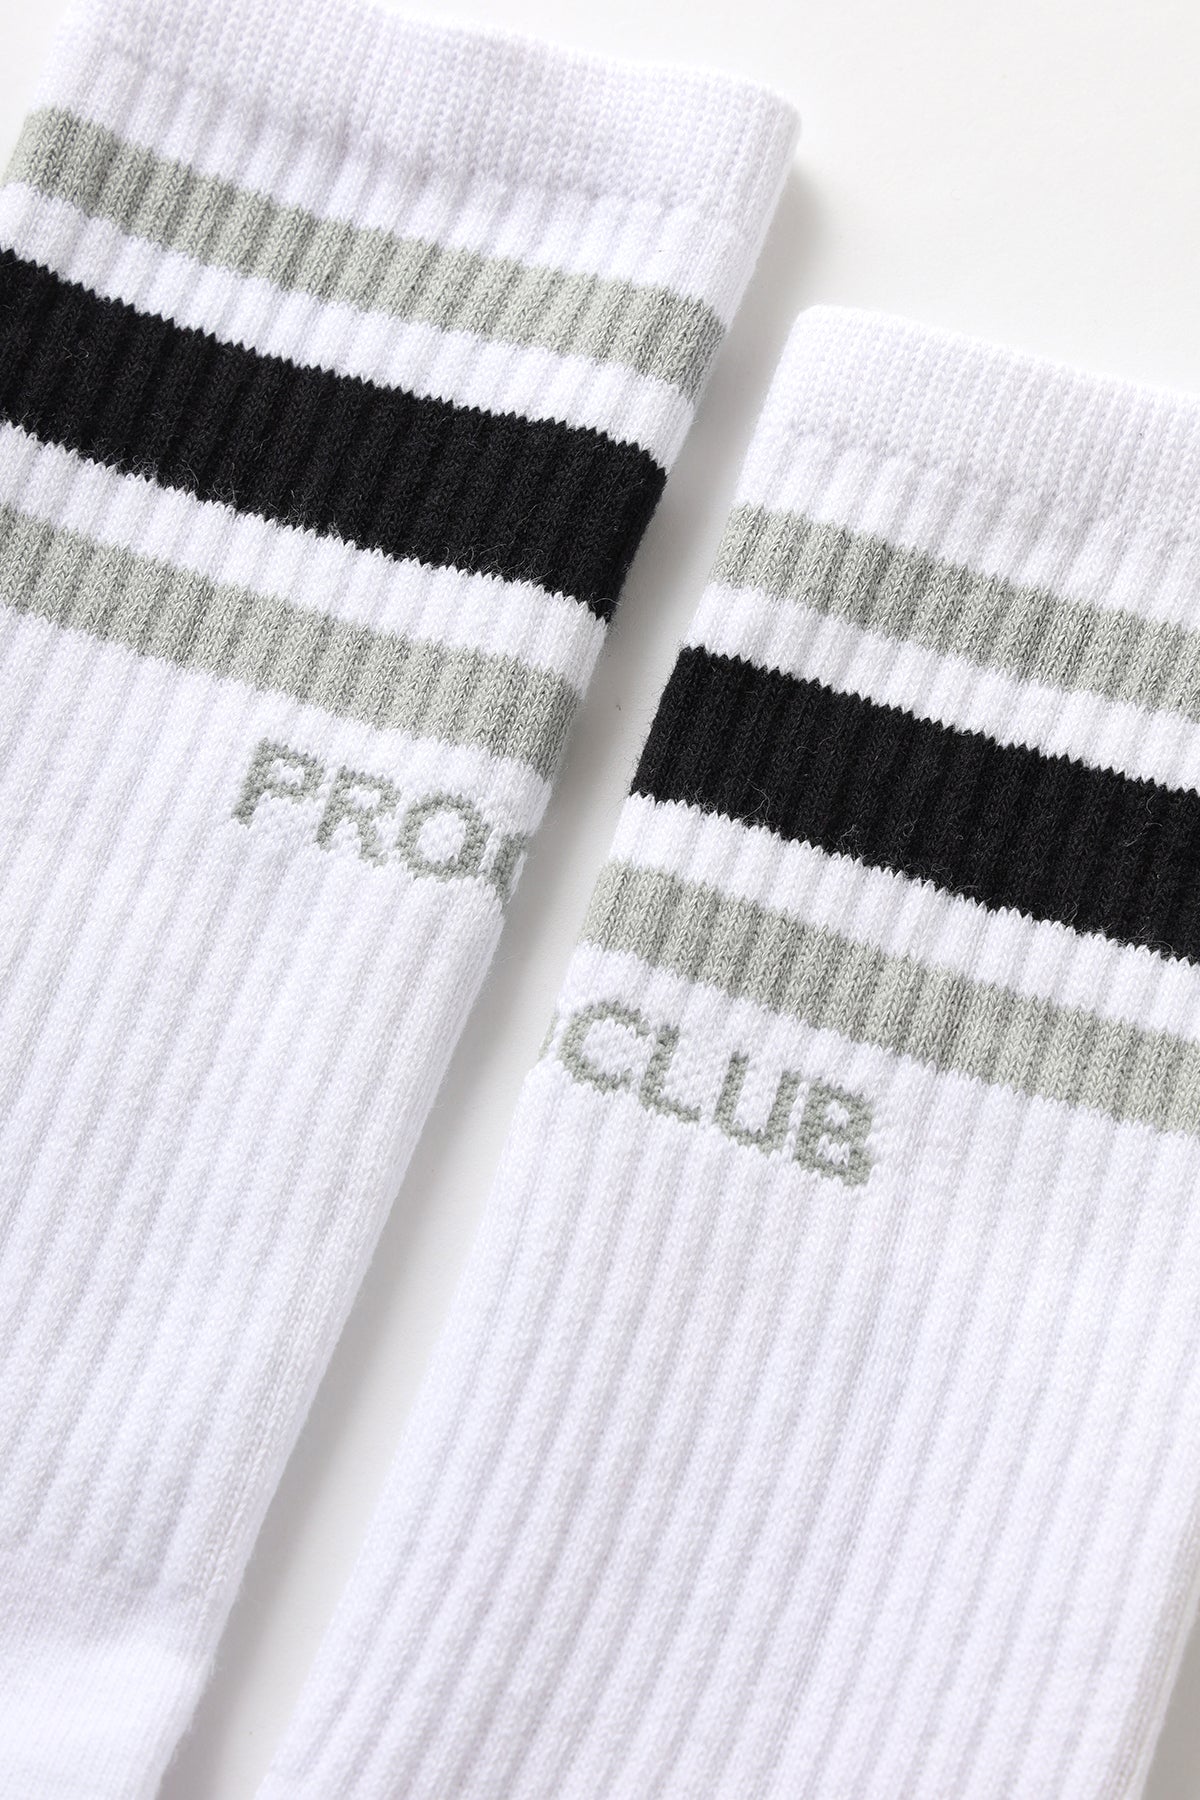 Pro Club - Striped Crew Socks - Grey/Black